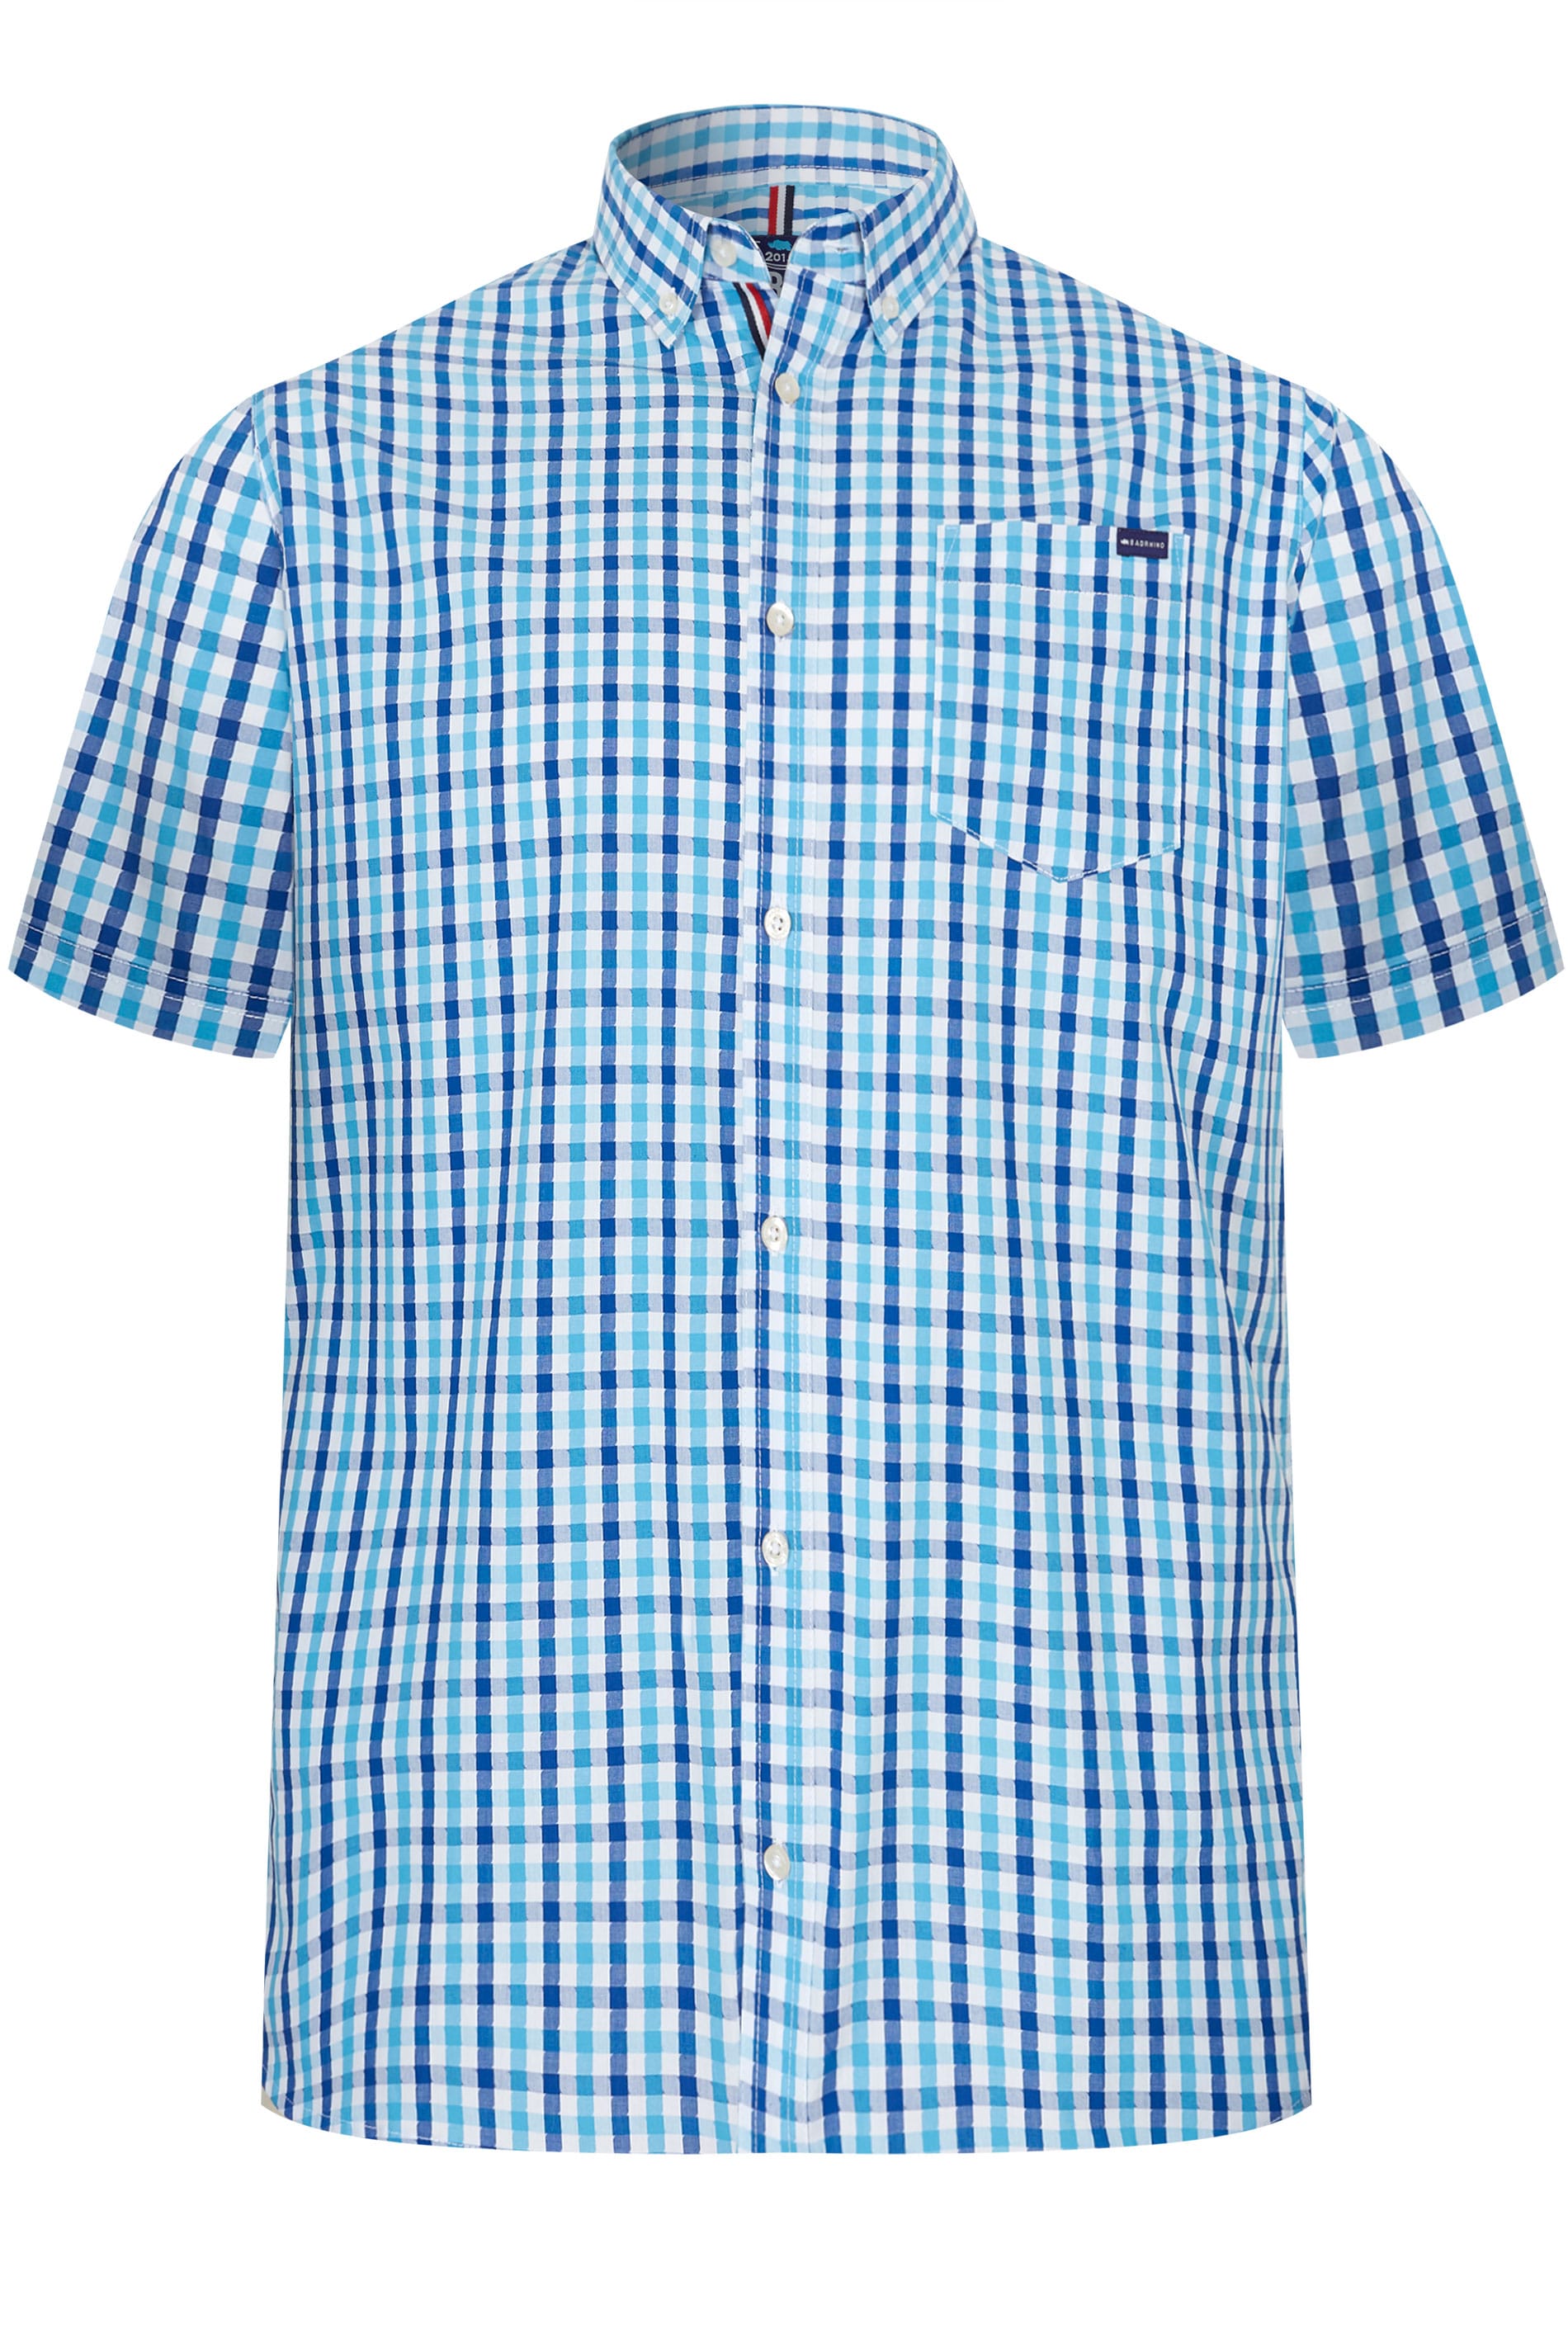 BadRhino Blue Check Short Sleeve Shirt_a3bf.jpg